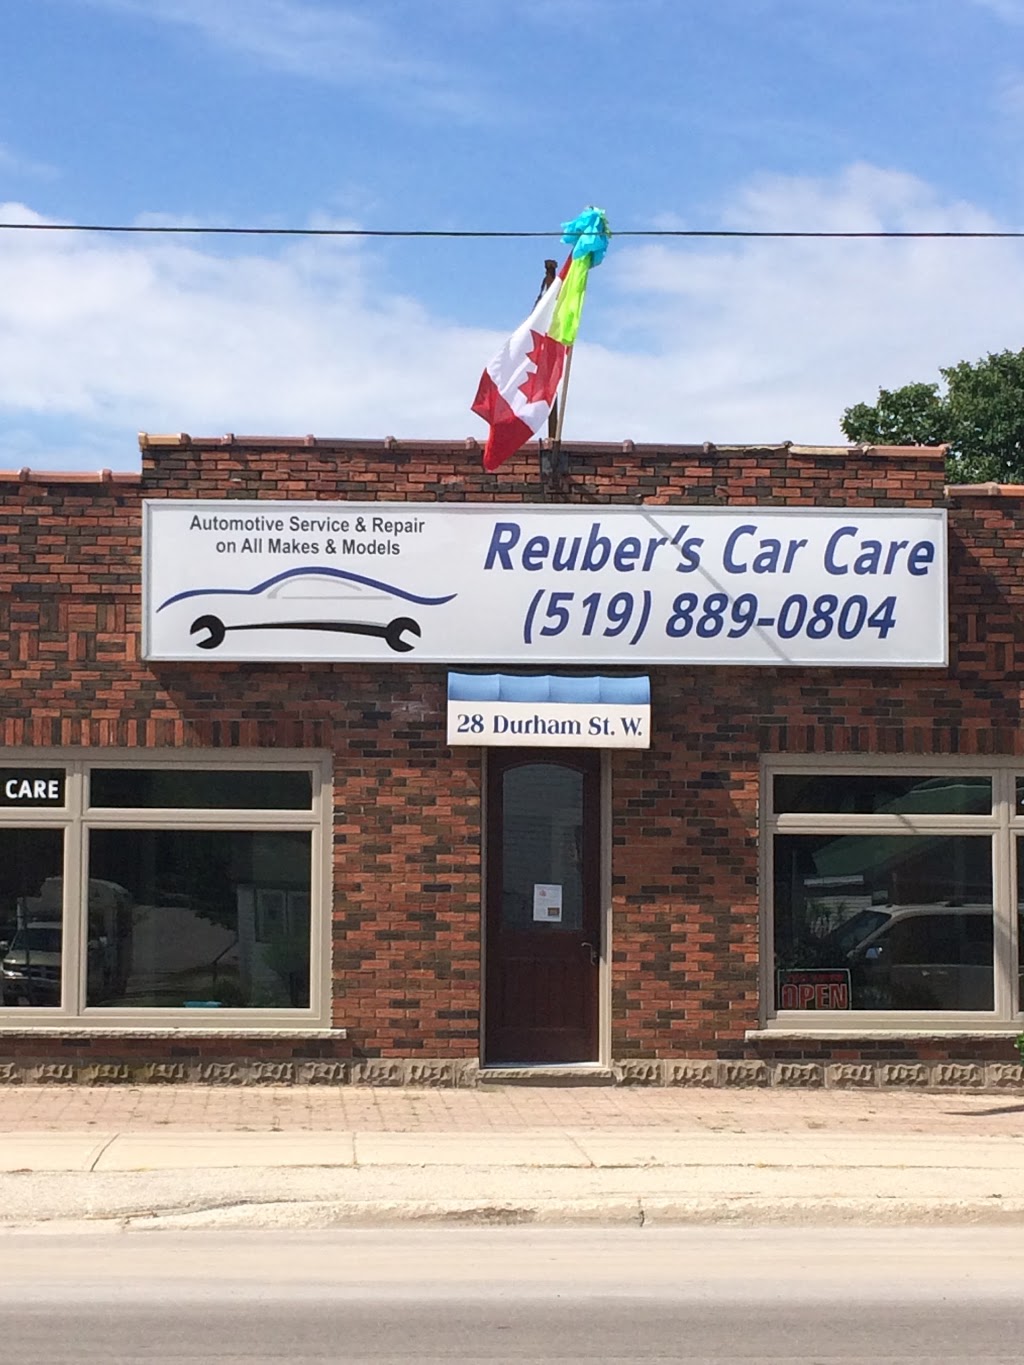 Reubers Car Care | 28 Durham St W, Walkerton, ON N0G 2V0, Canada | Phone: (519) 889-0804